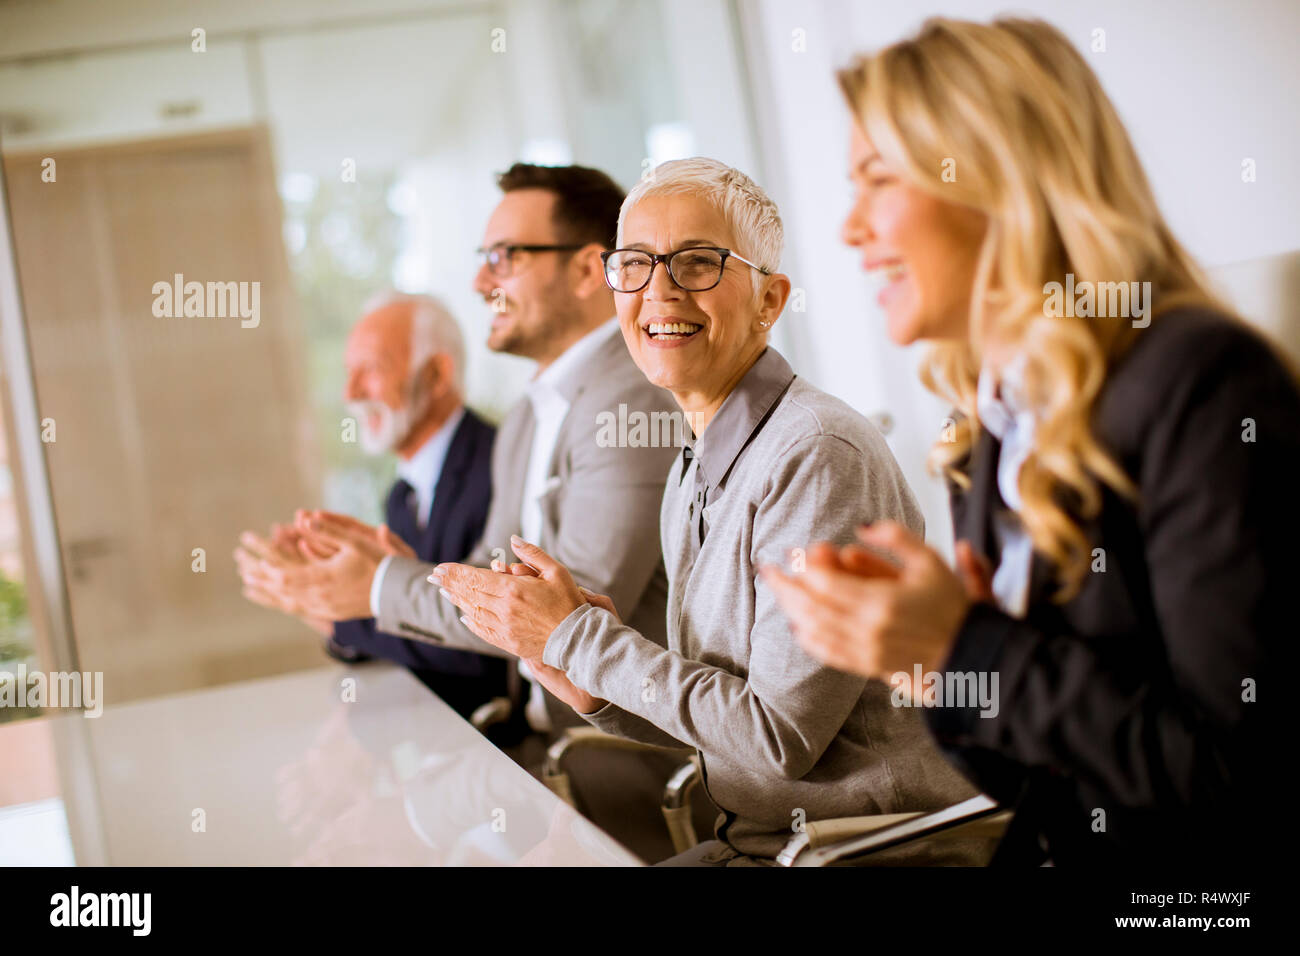 Satisfait de l'équipe entreprises fier clapping hands while sitting in row at office Banque D'Images